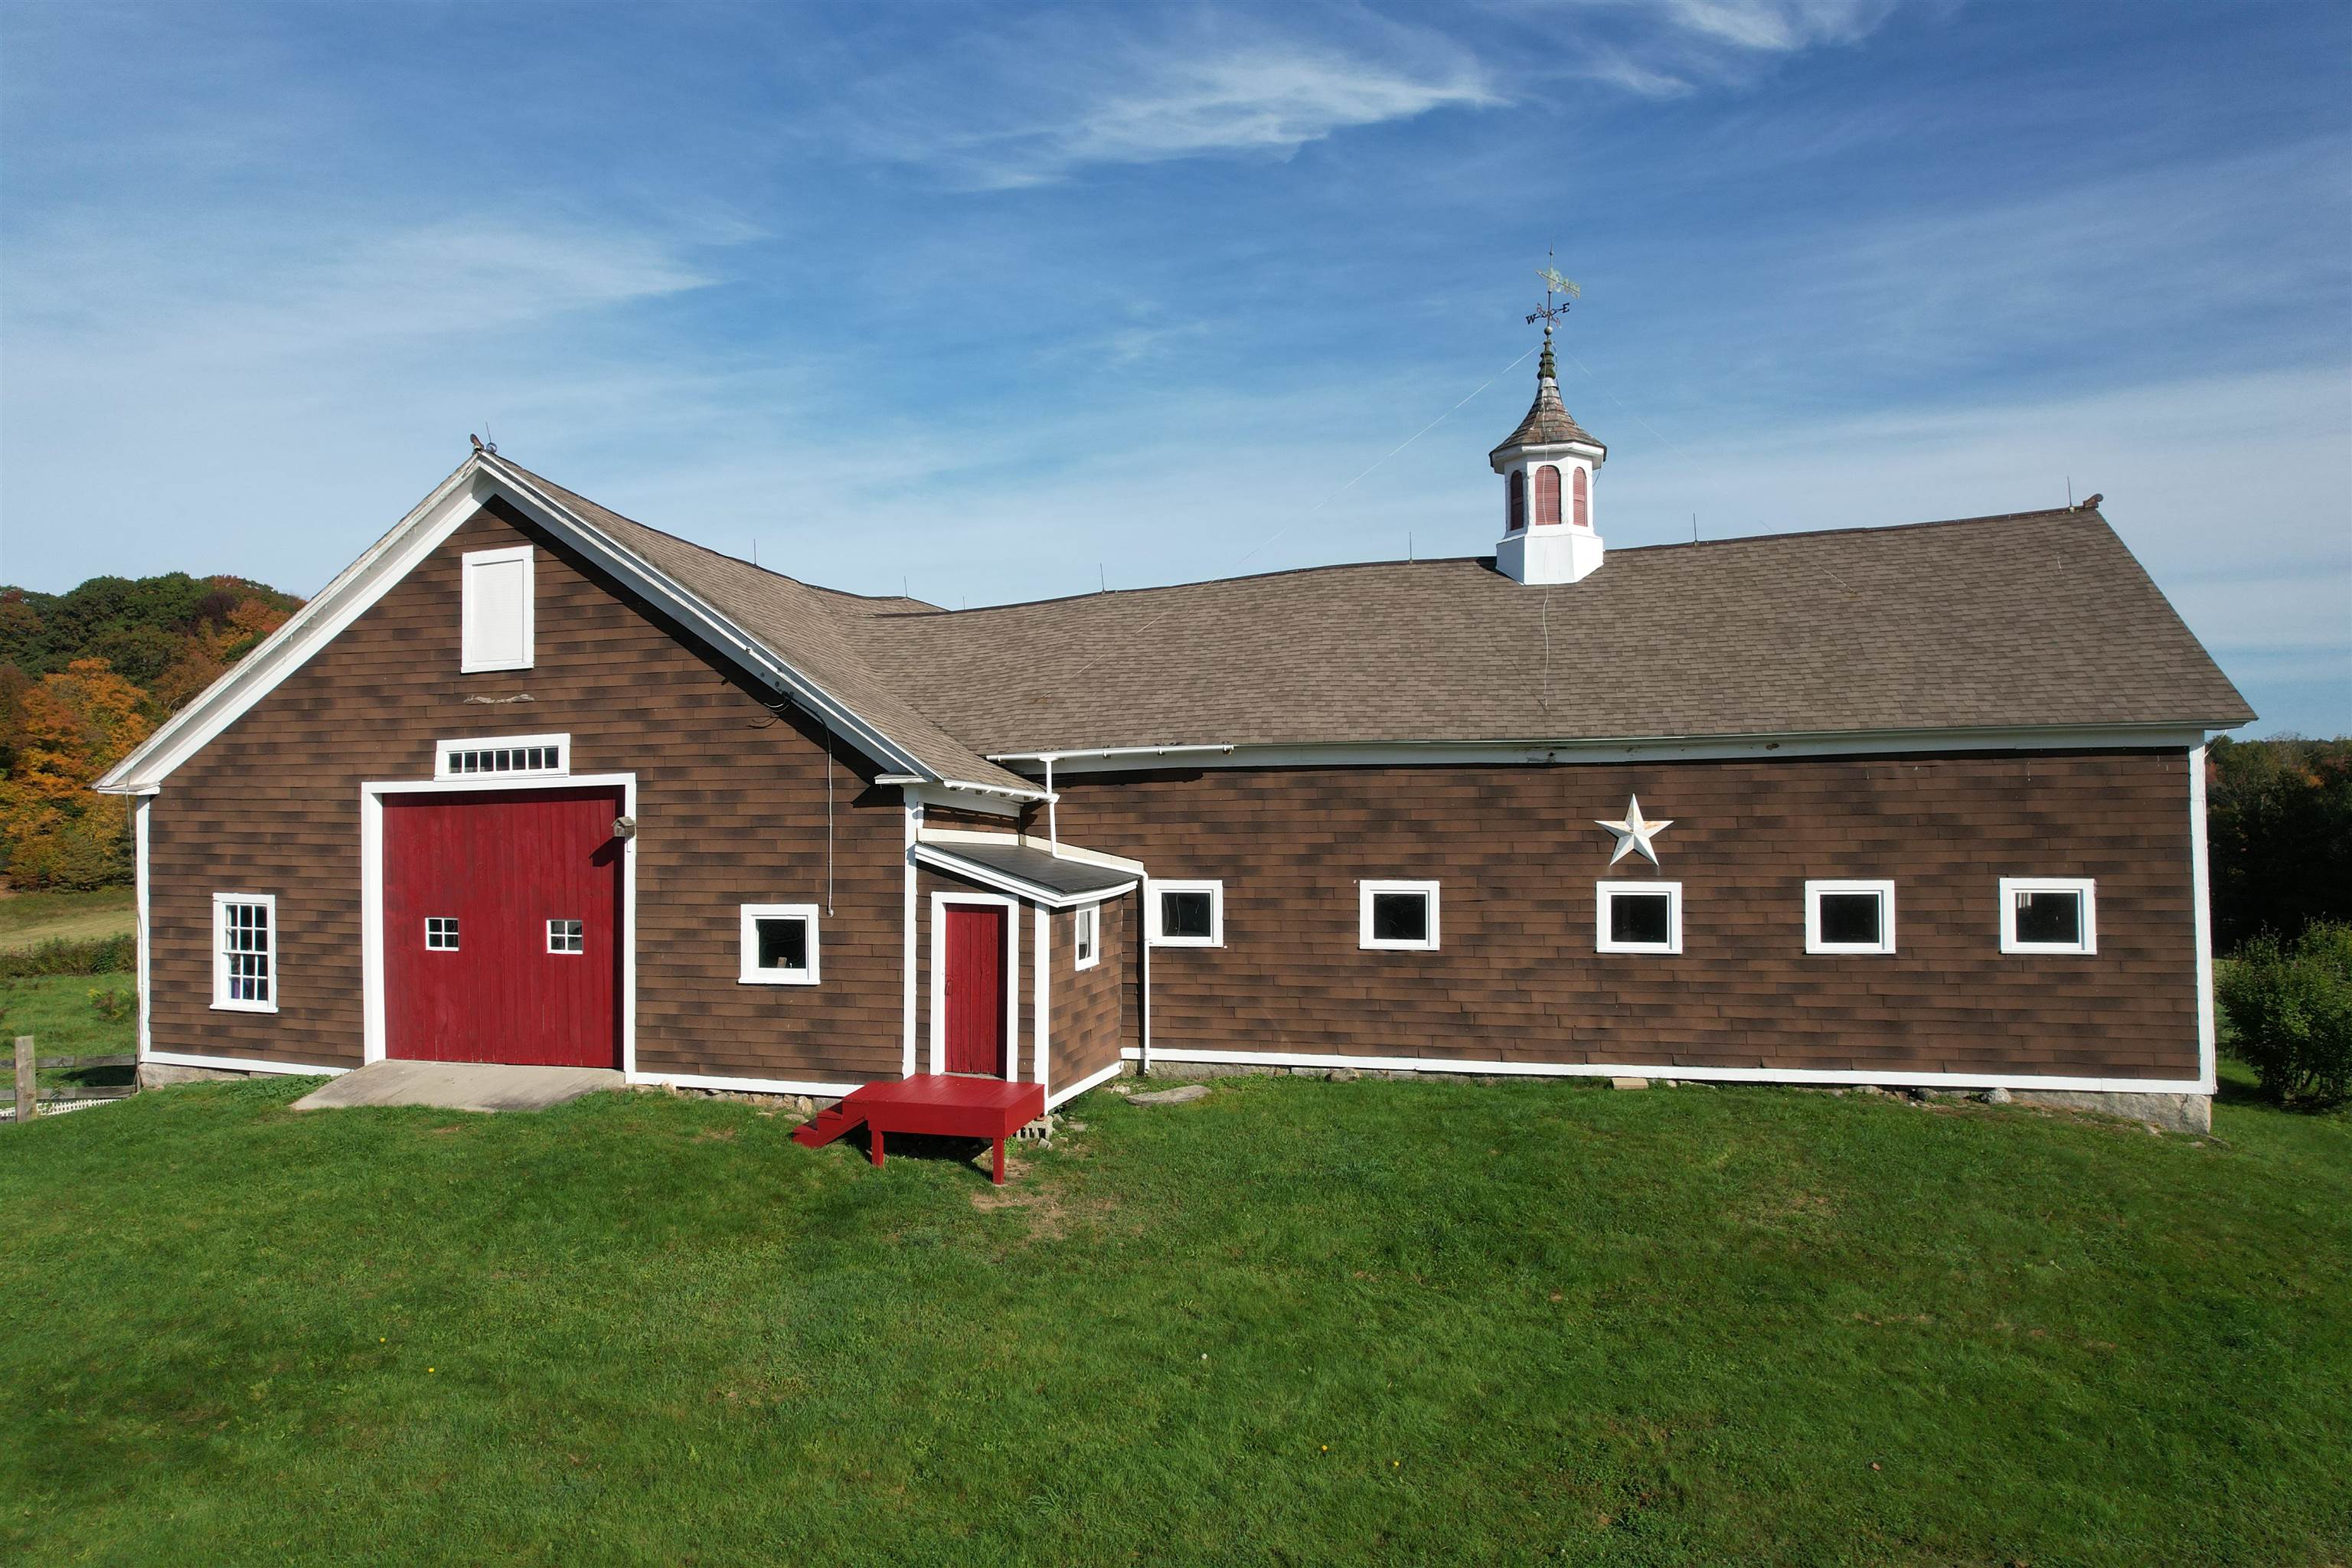 4100 sq.ft. barn w/loft, 5 horse stalls.